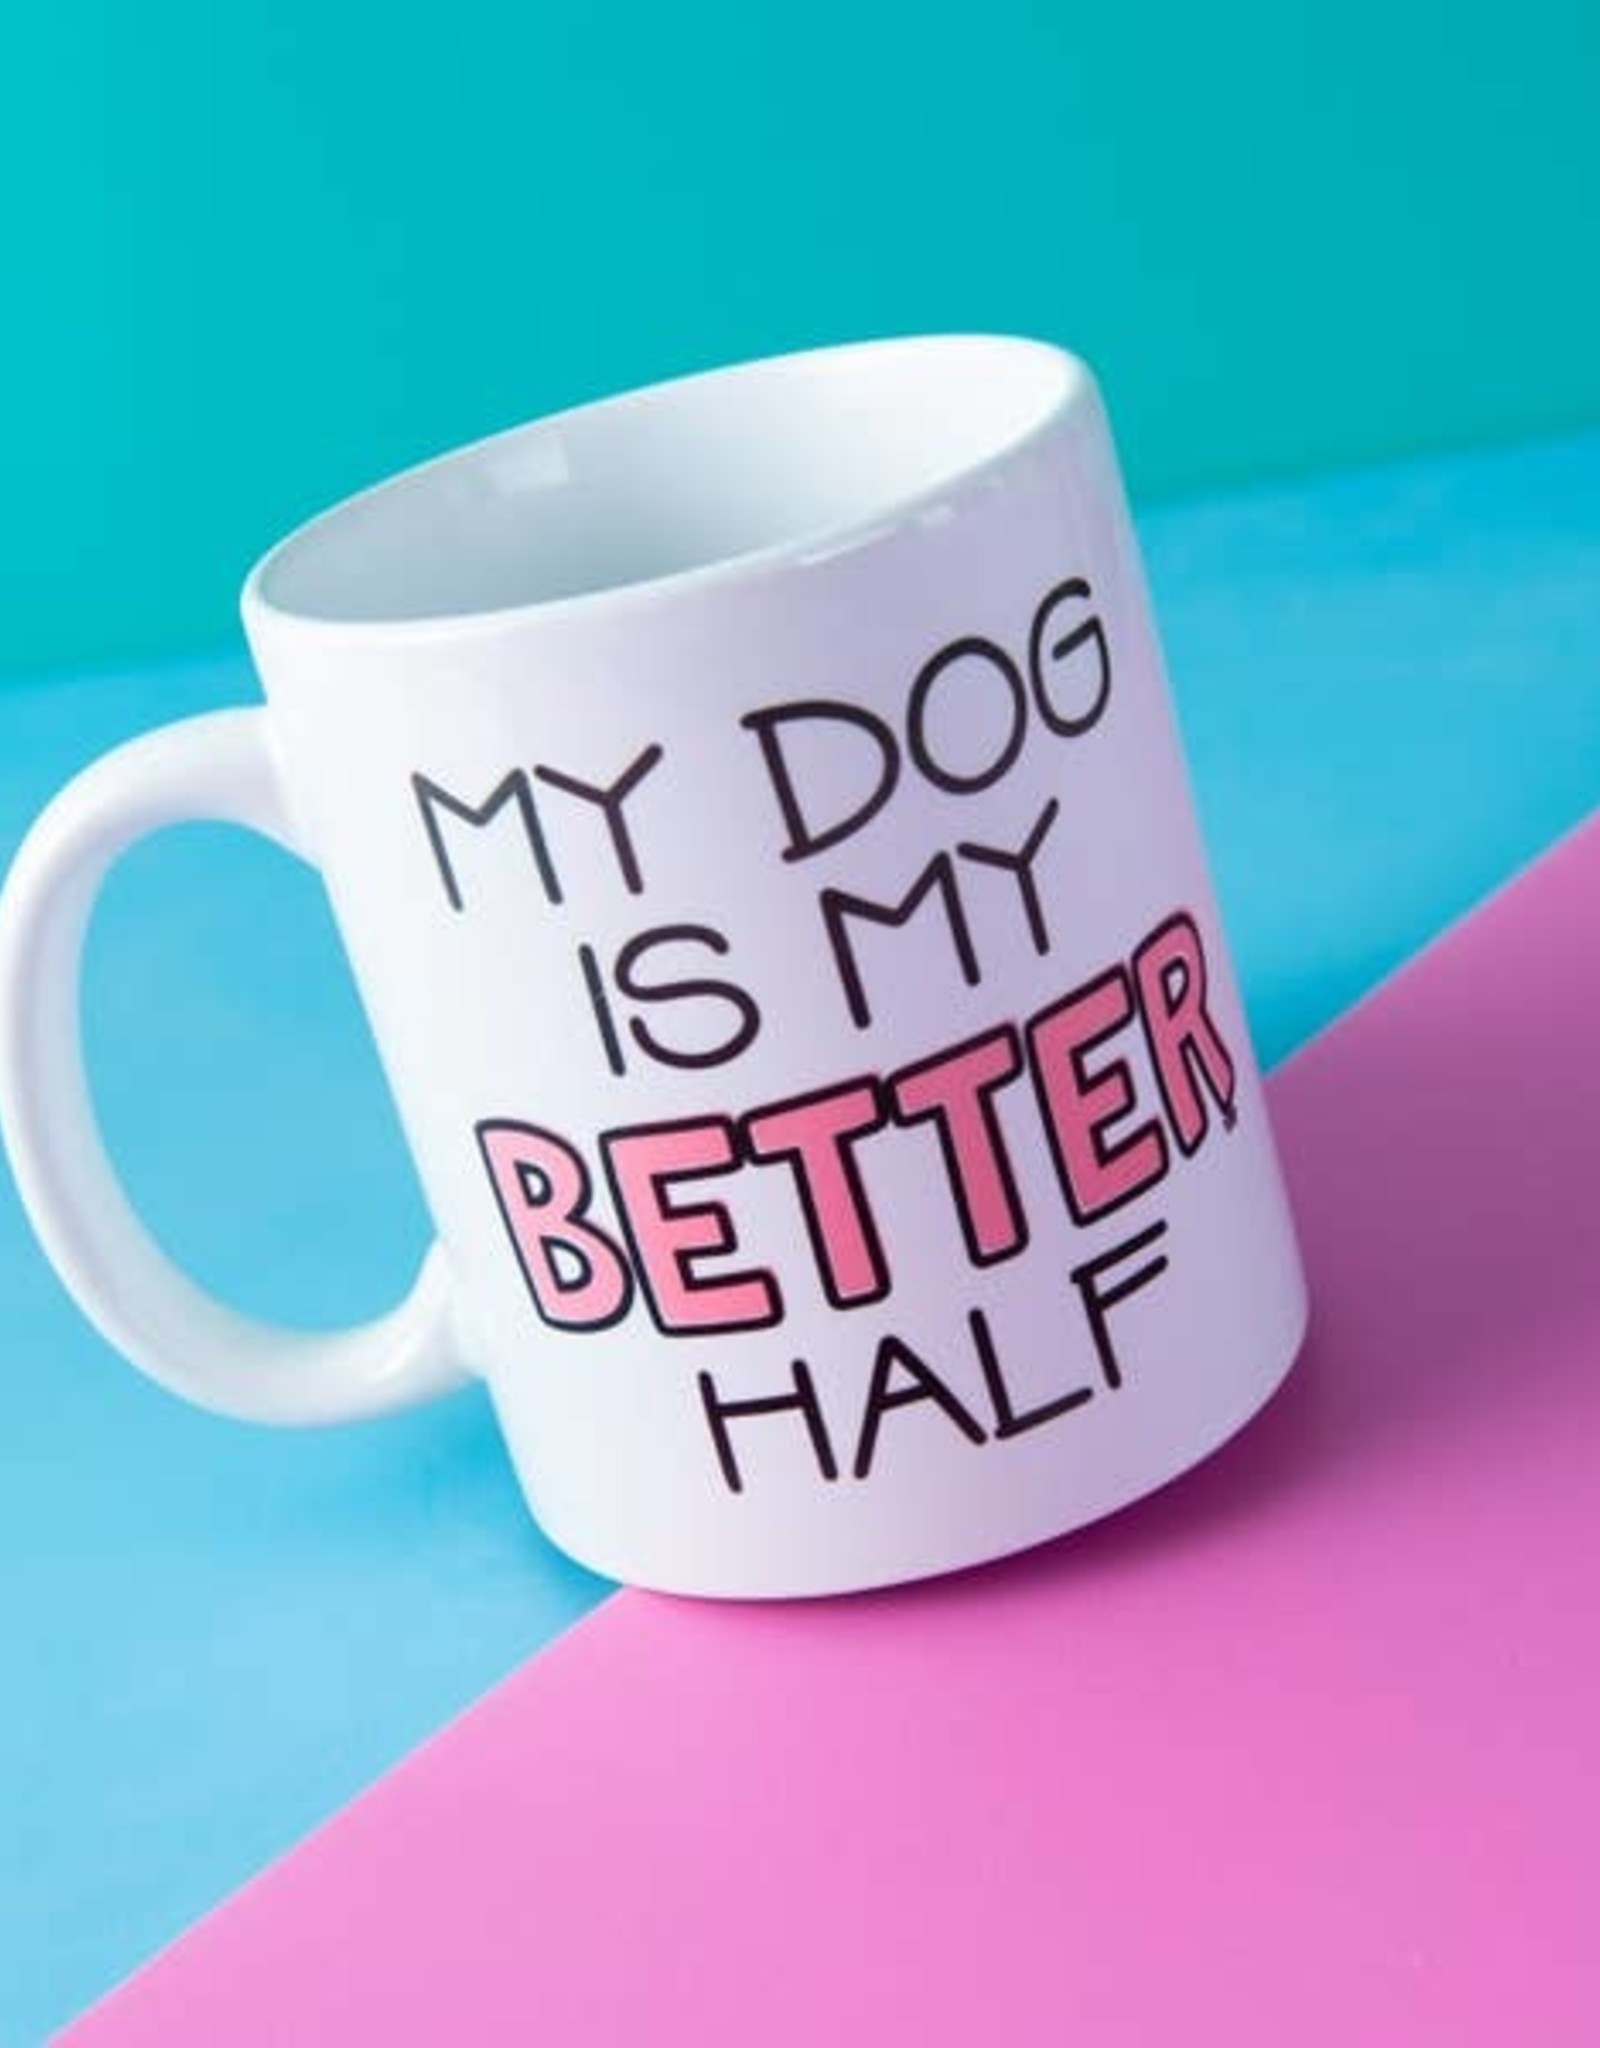 My Dog is My Better Half 11 oz. Mug